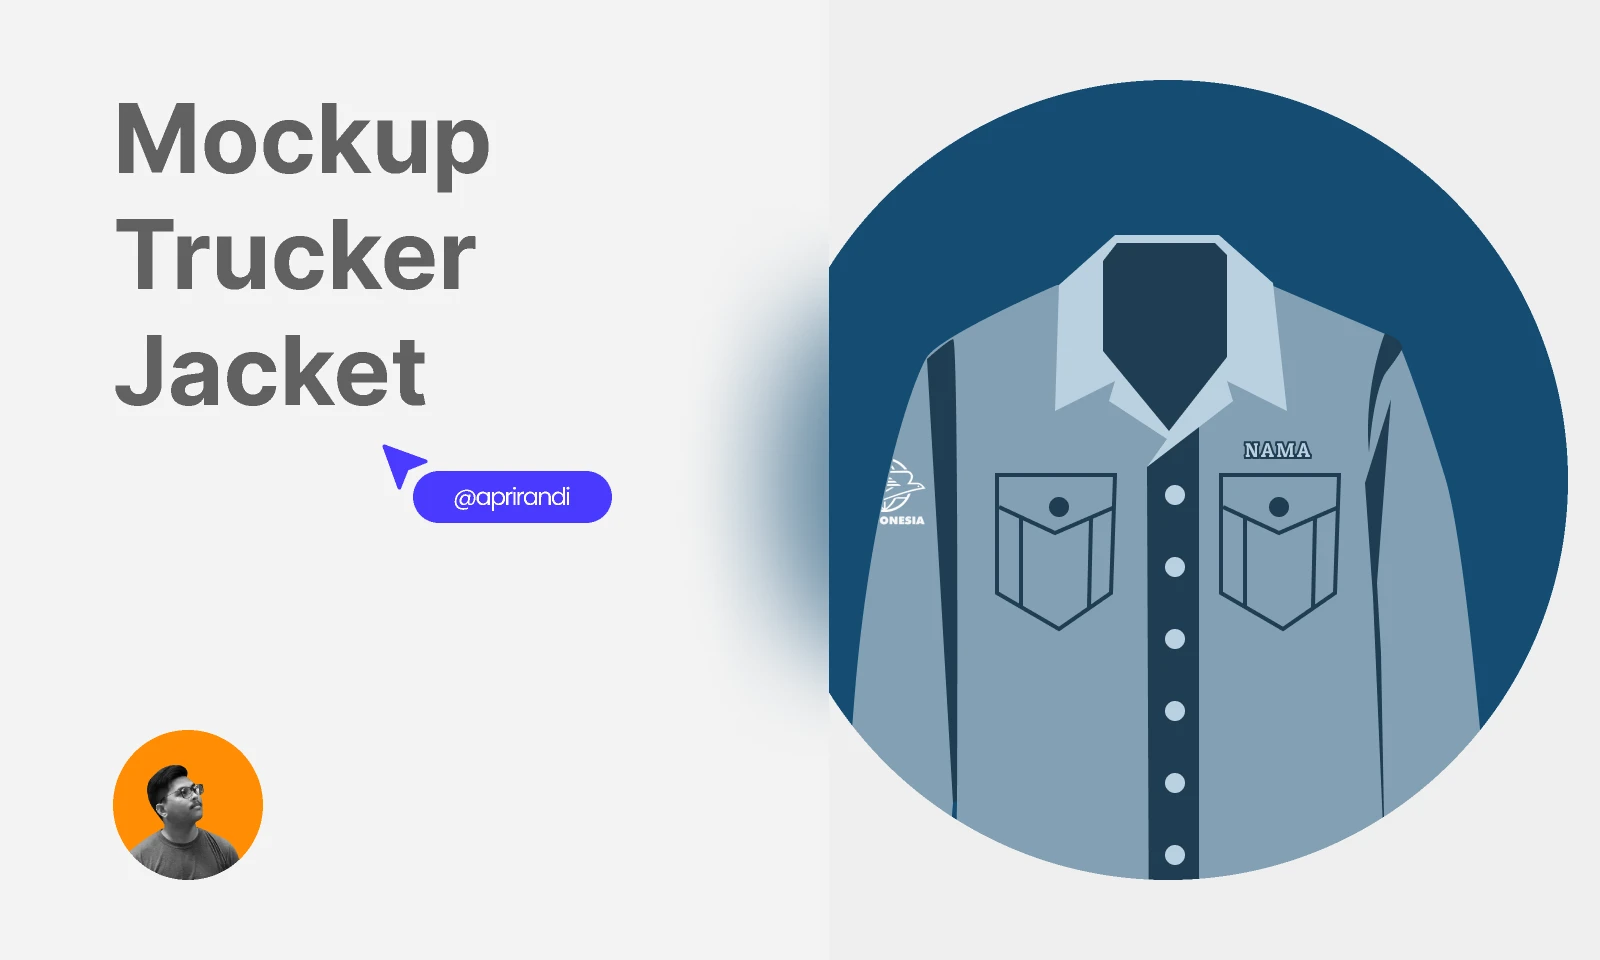 Mockup Trucker Jacket for Figma and Adobe XD